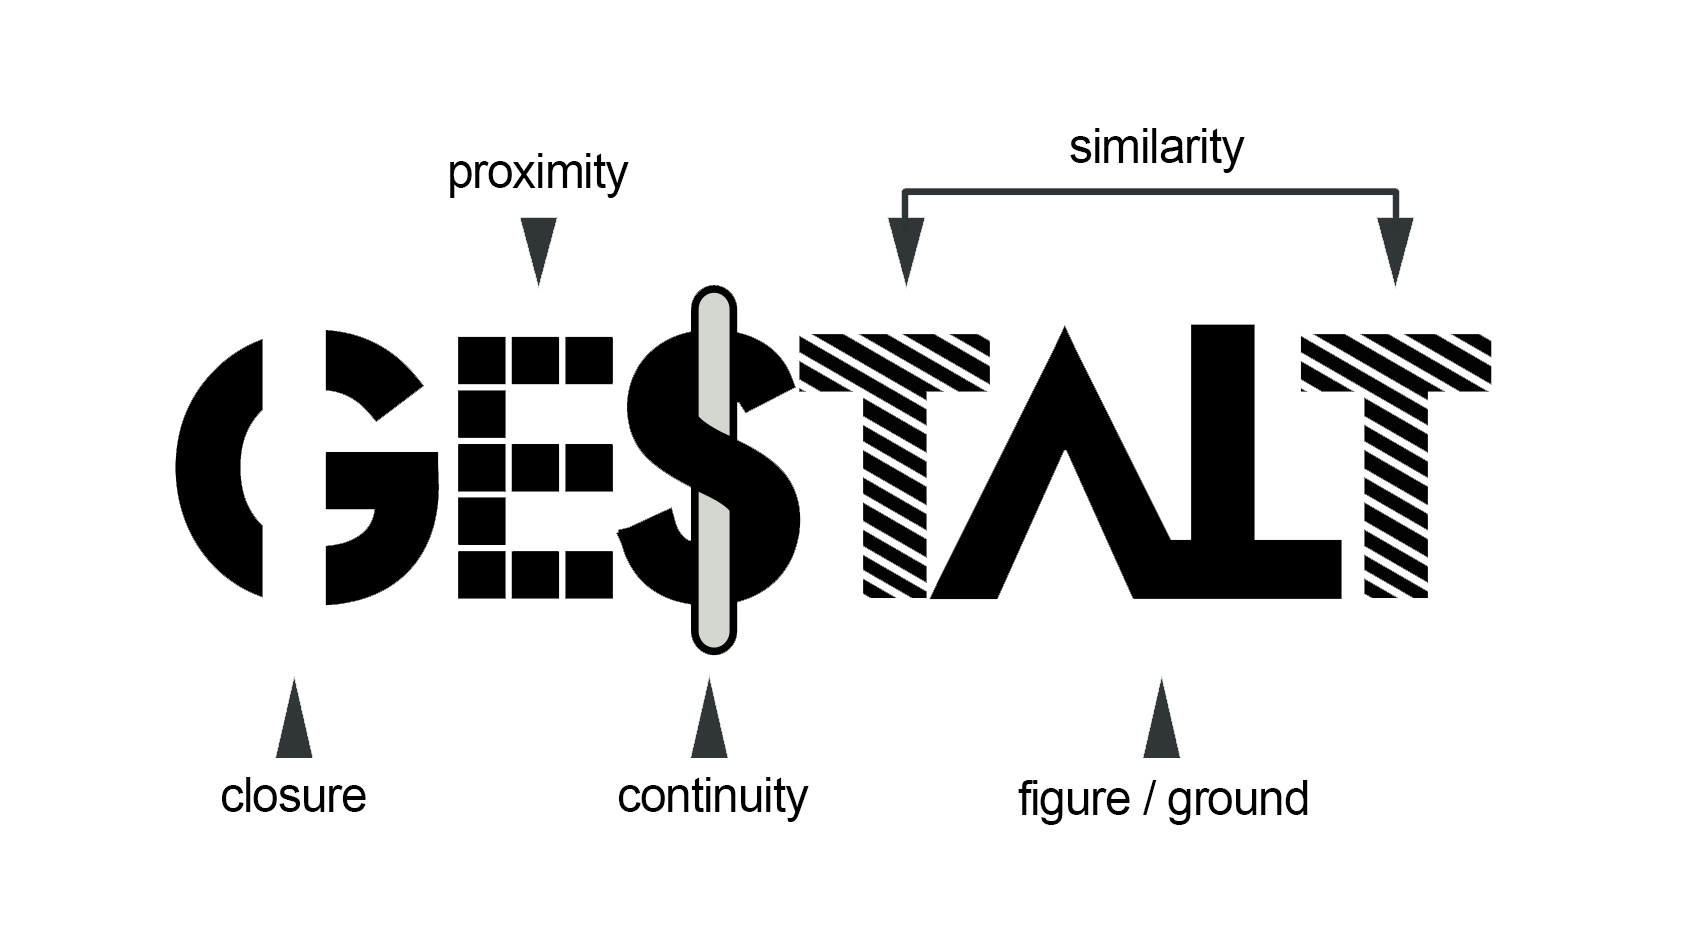 Gestalt principles